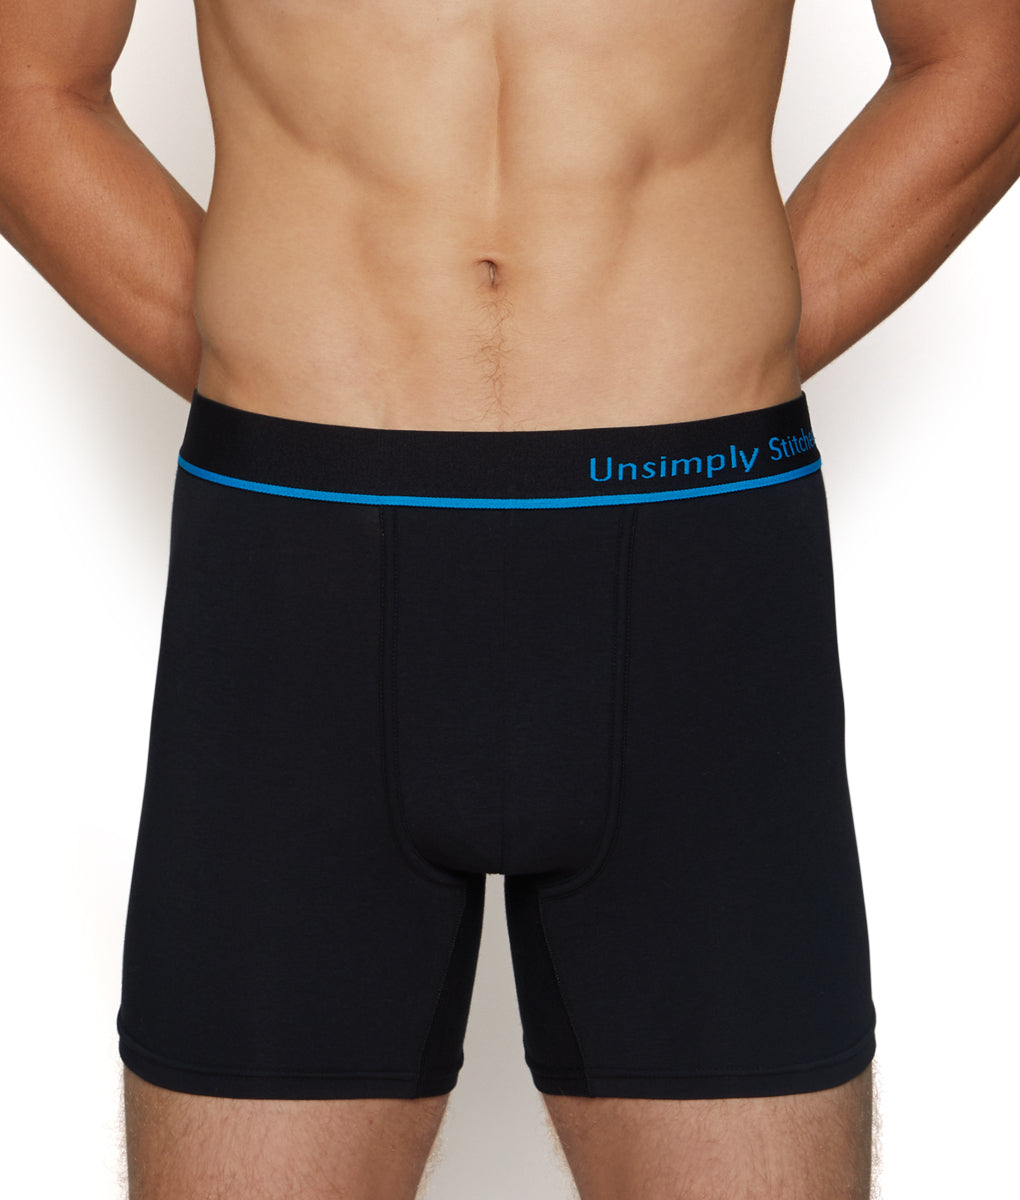 Unsimply Stitched Solid Boxer Brief - Underwear Expert